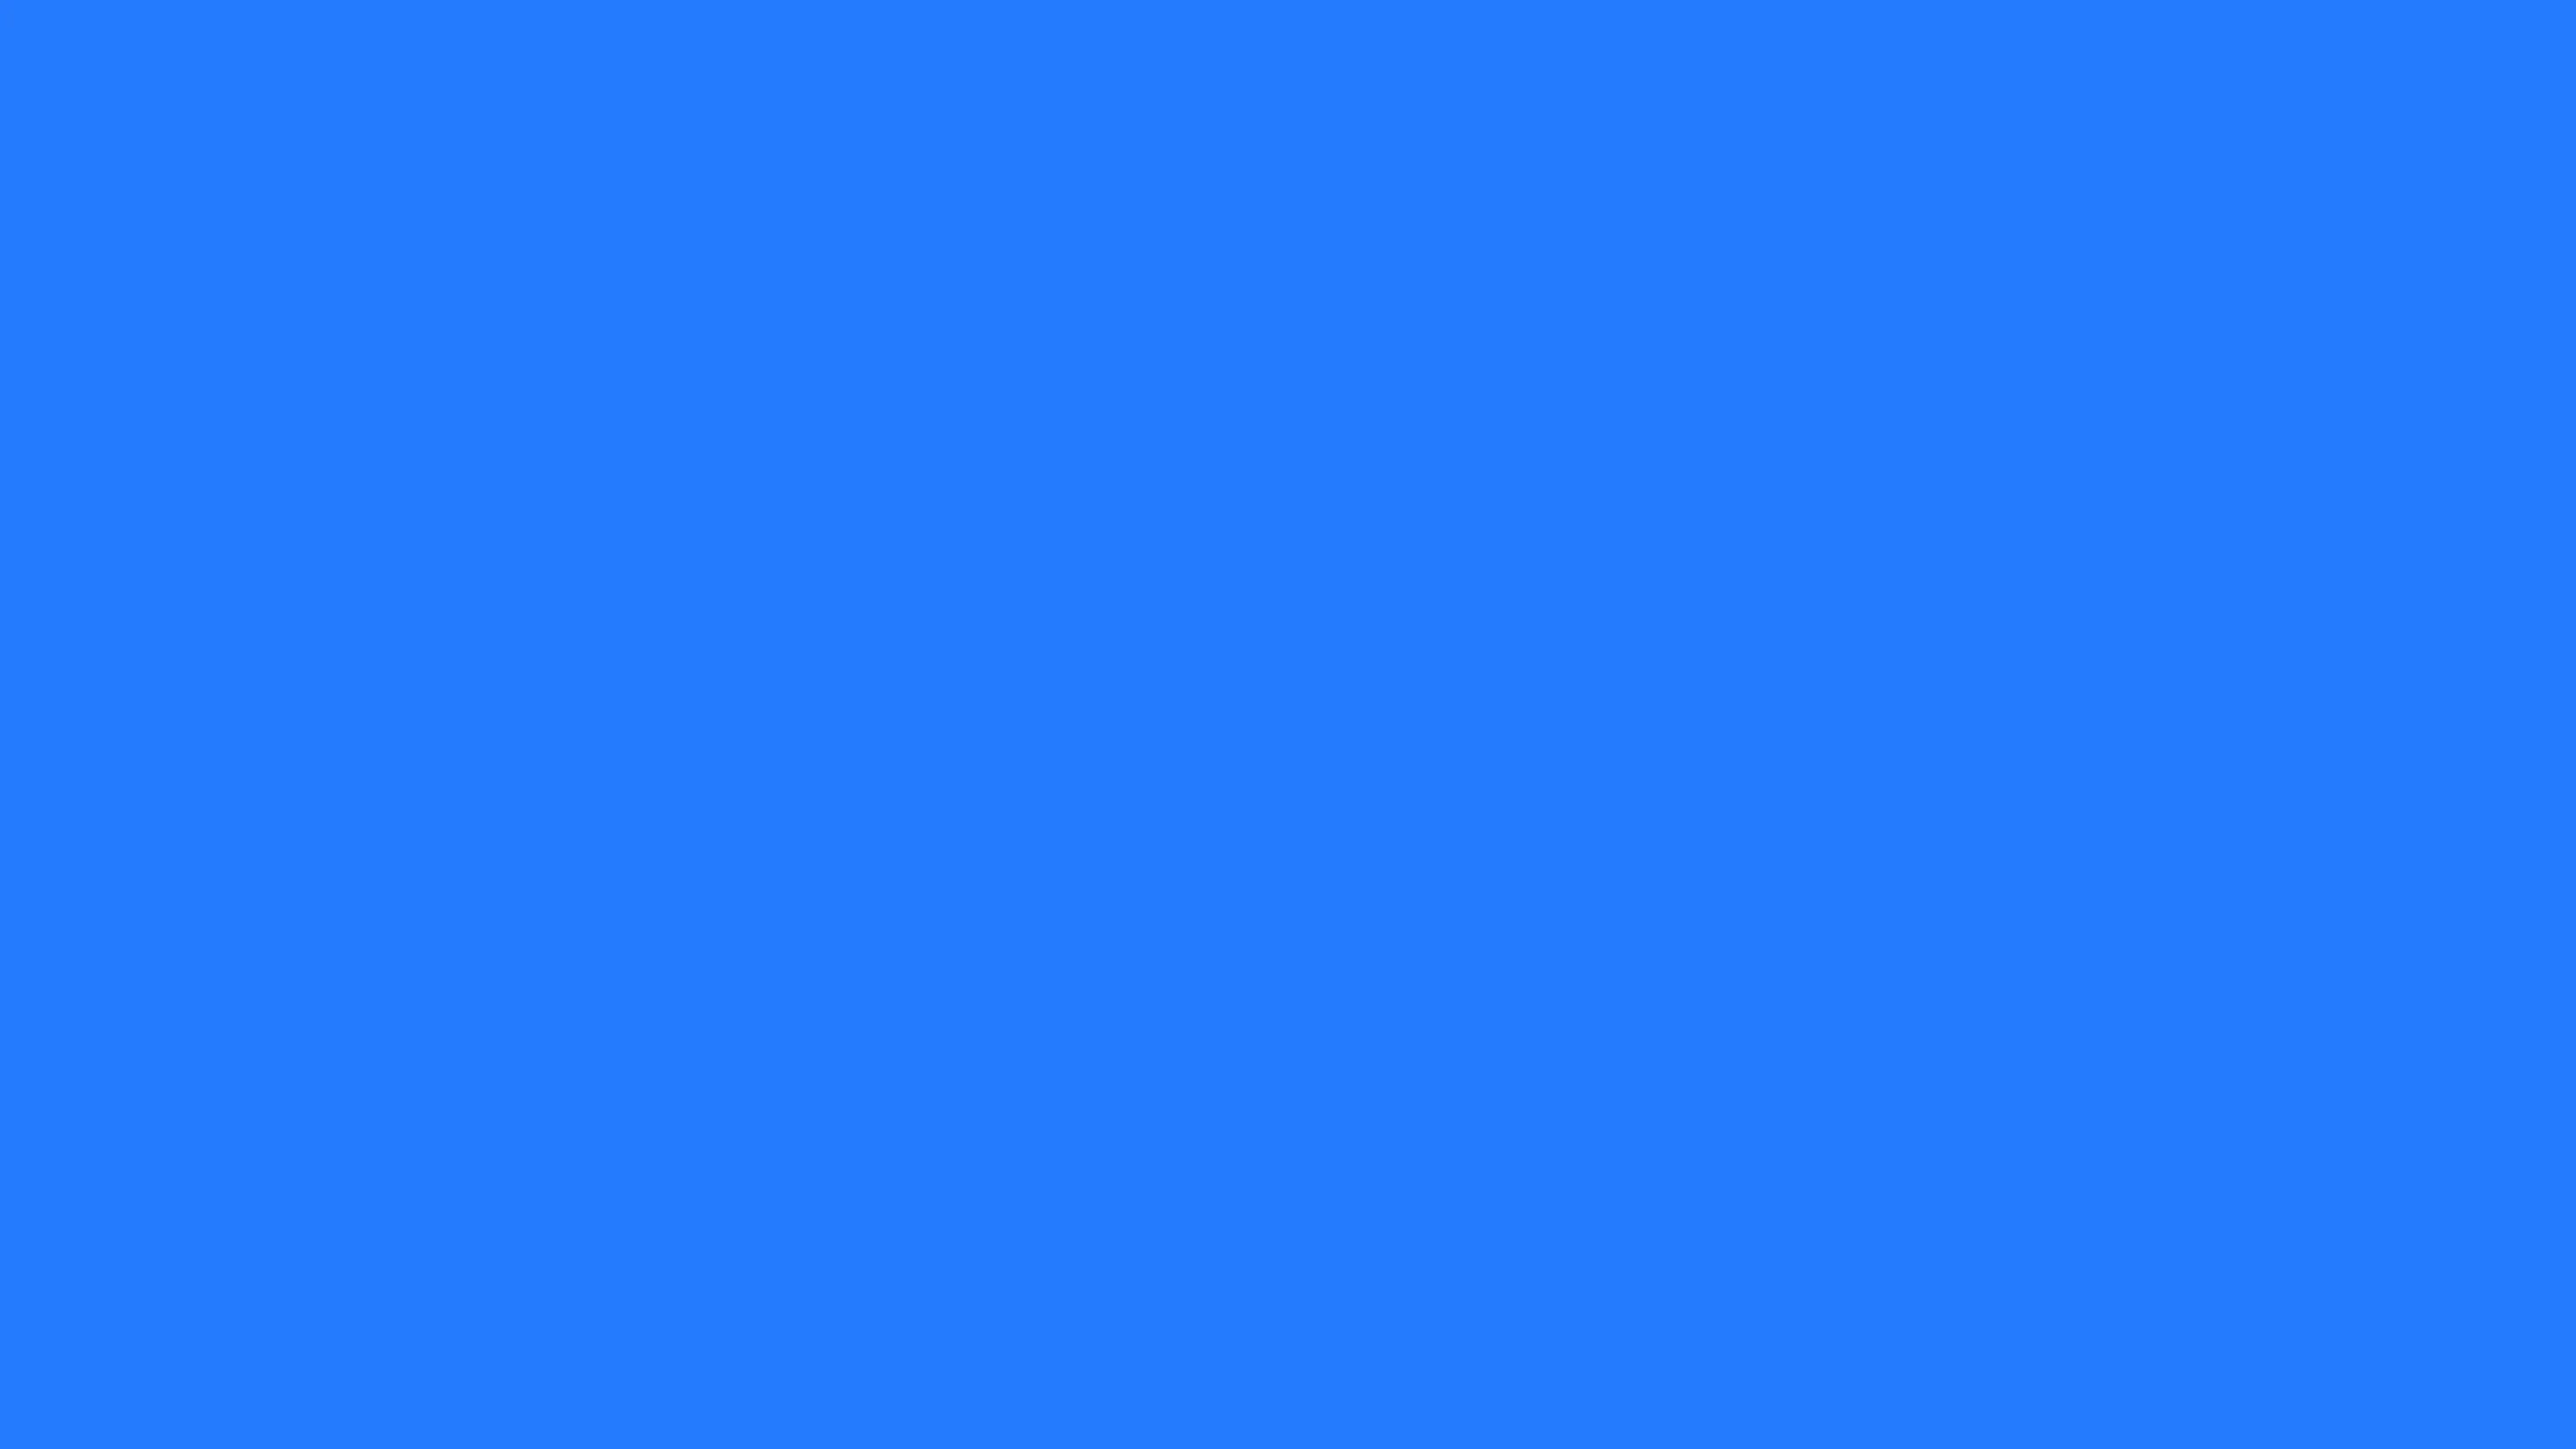 Тест проверки битых пикселей на телевизоре. Чисто синий цвет. Картинки для проверки на битые пиксели.